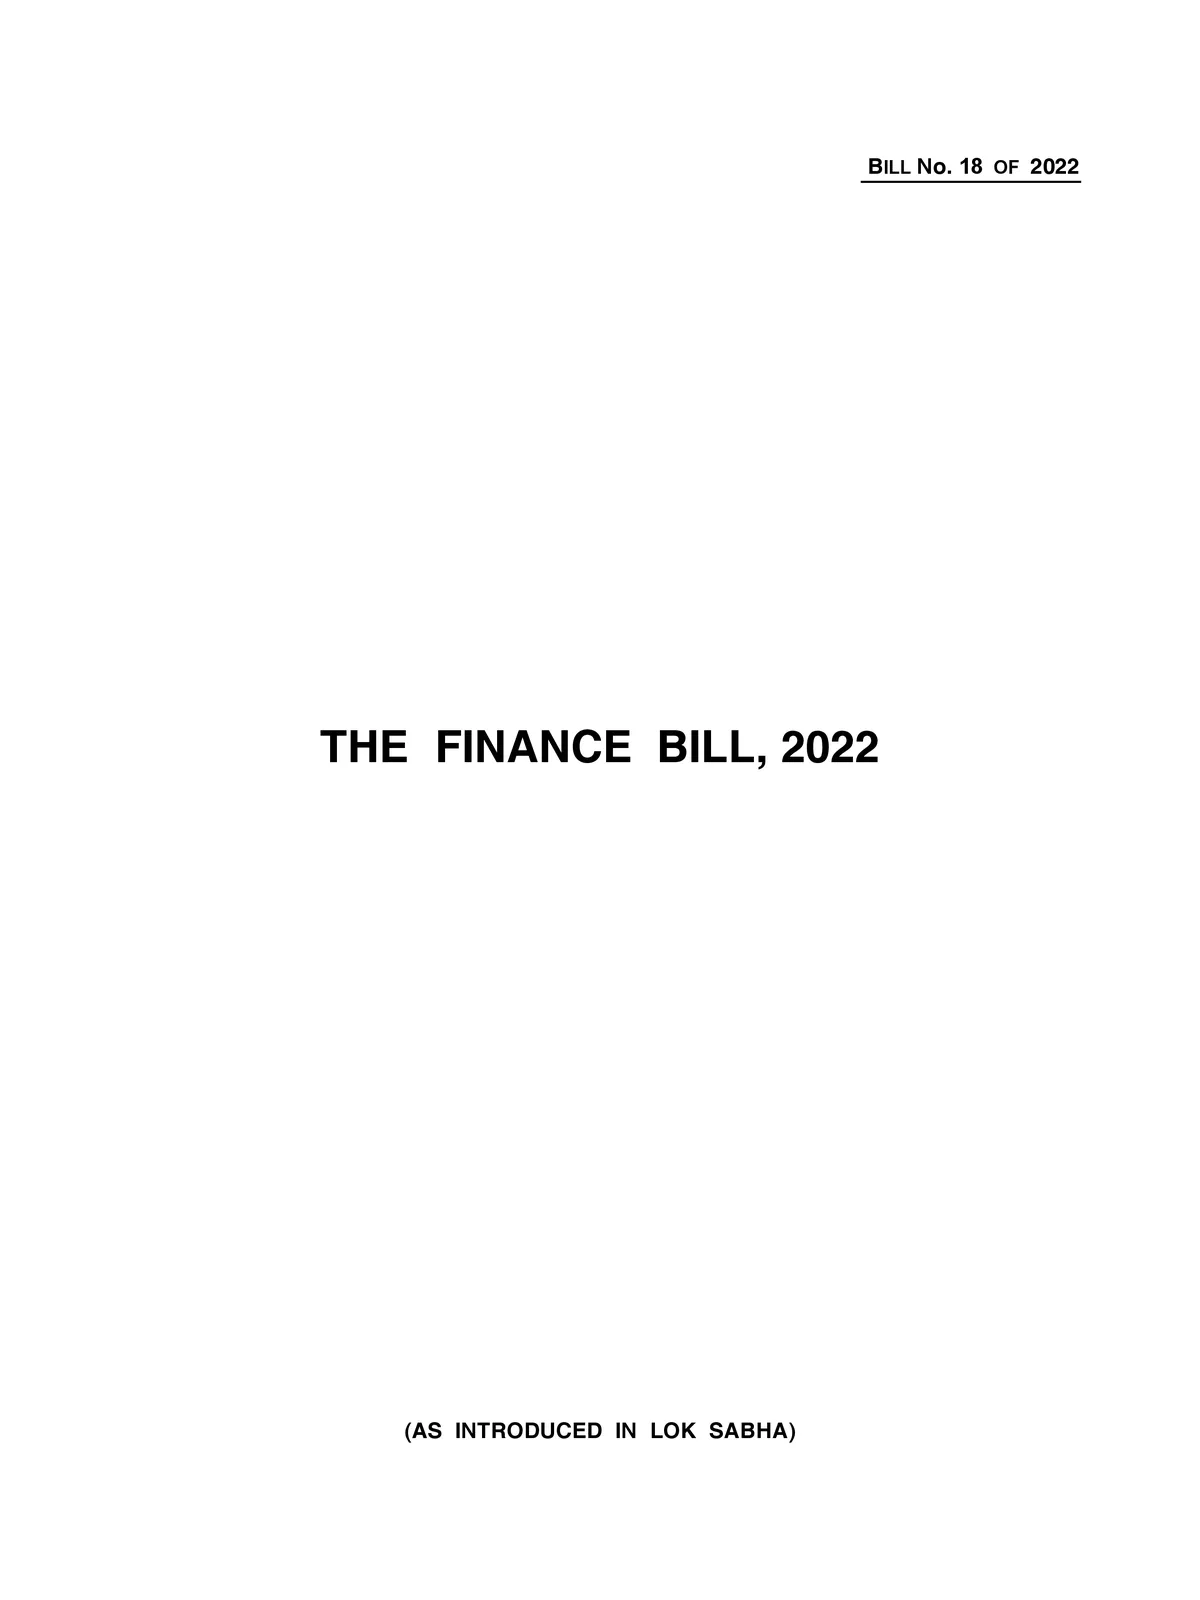 Finance Act 2022